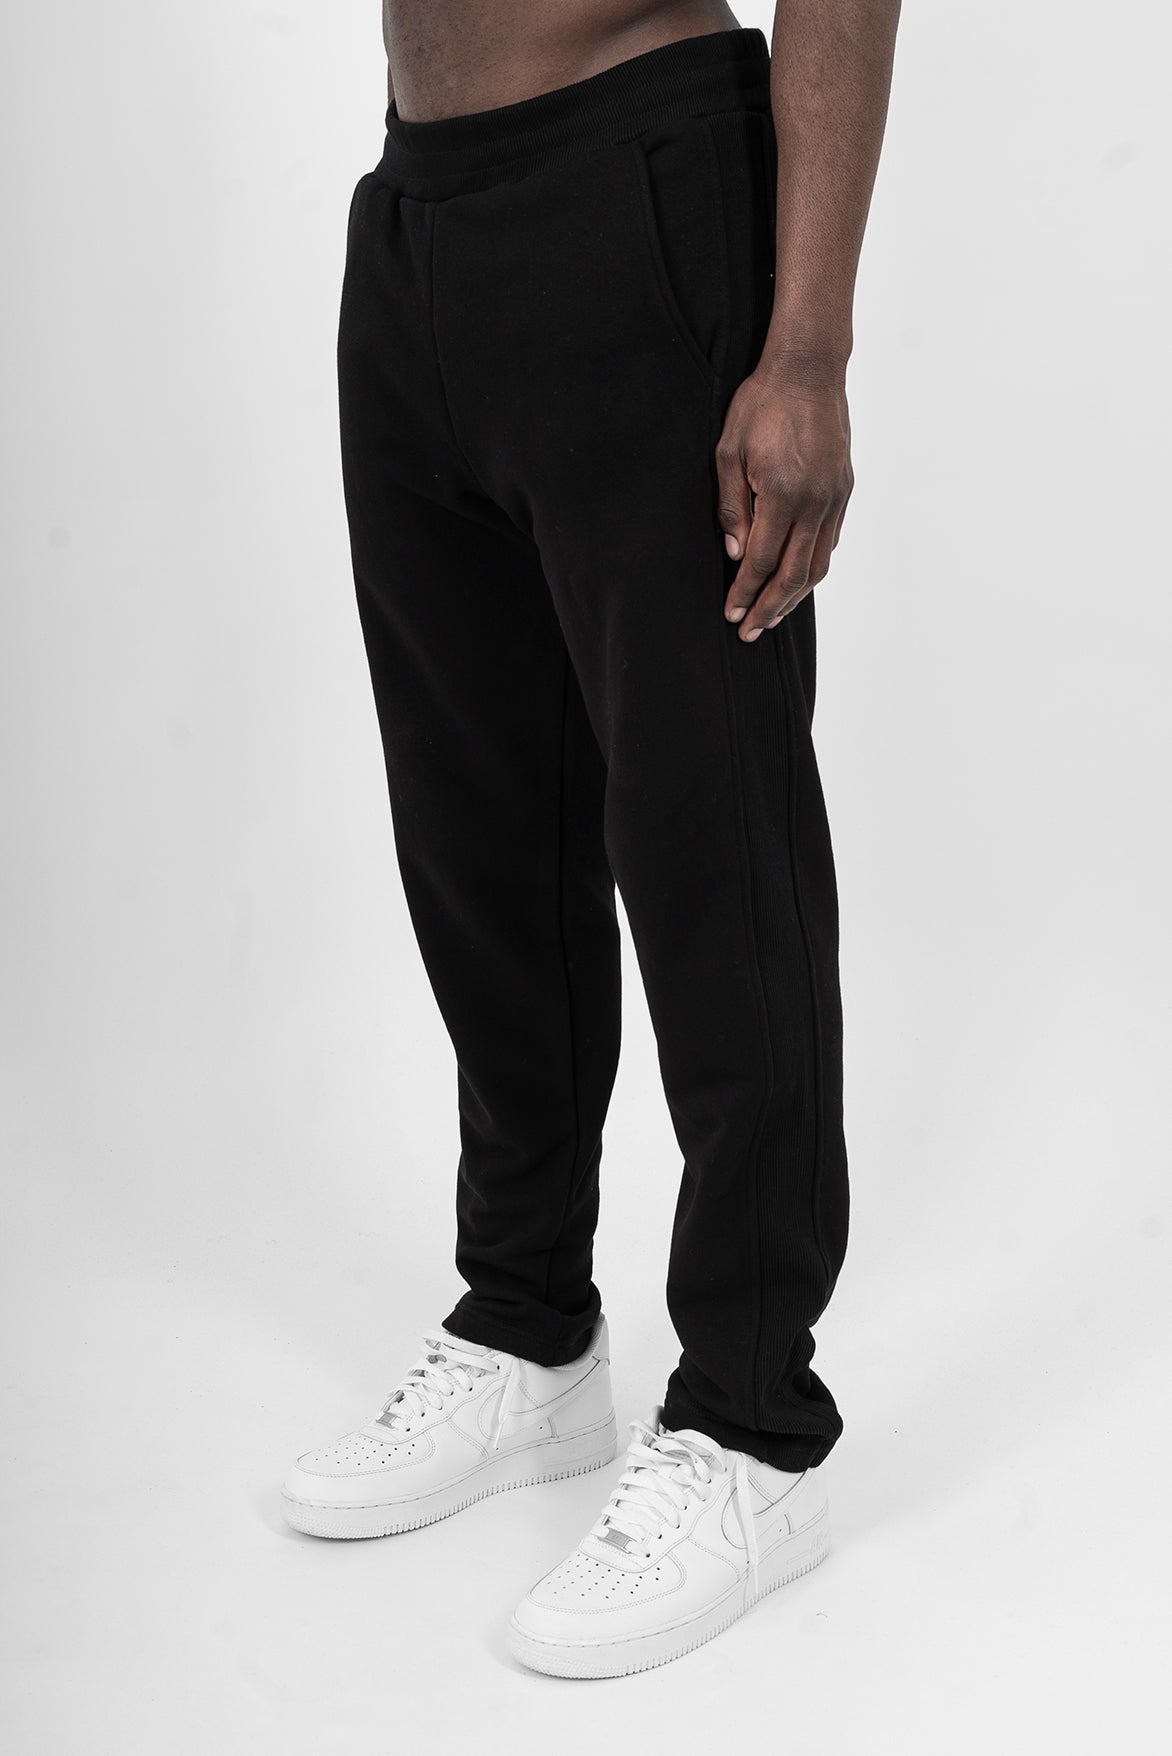 straight leg jogger, black – HOOD OF SAINTS™ inspired by 579